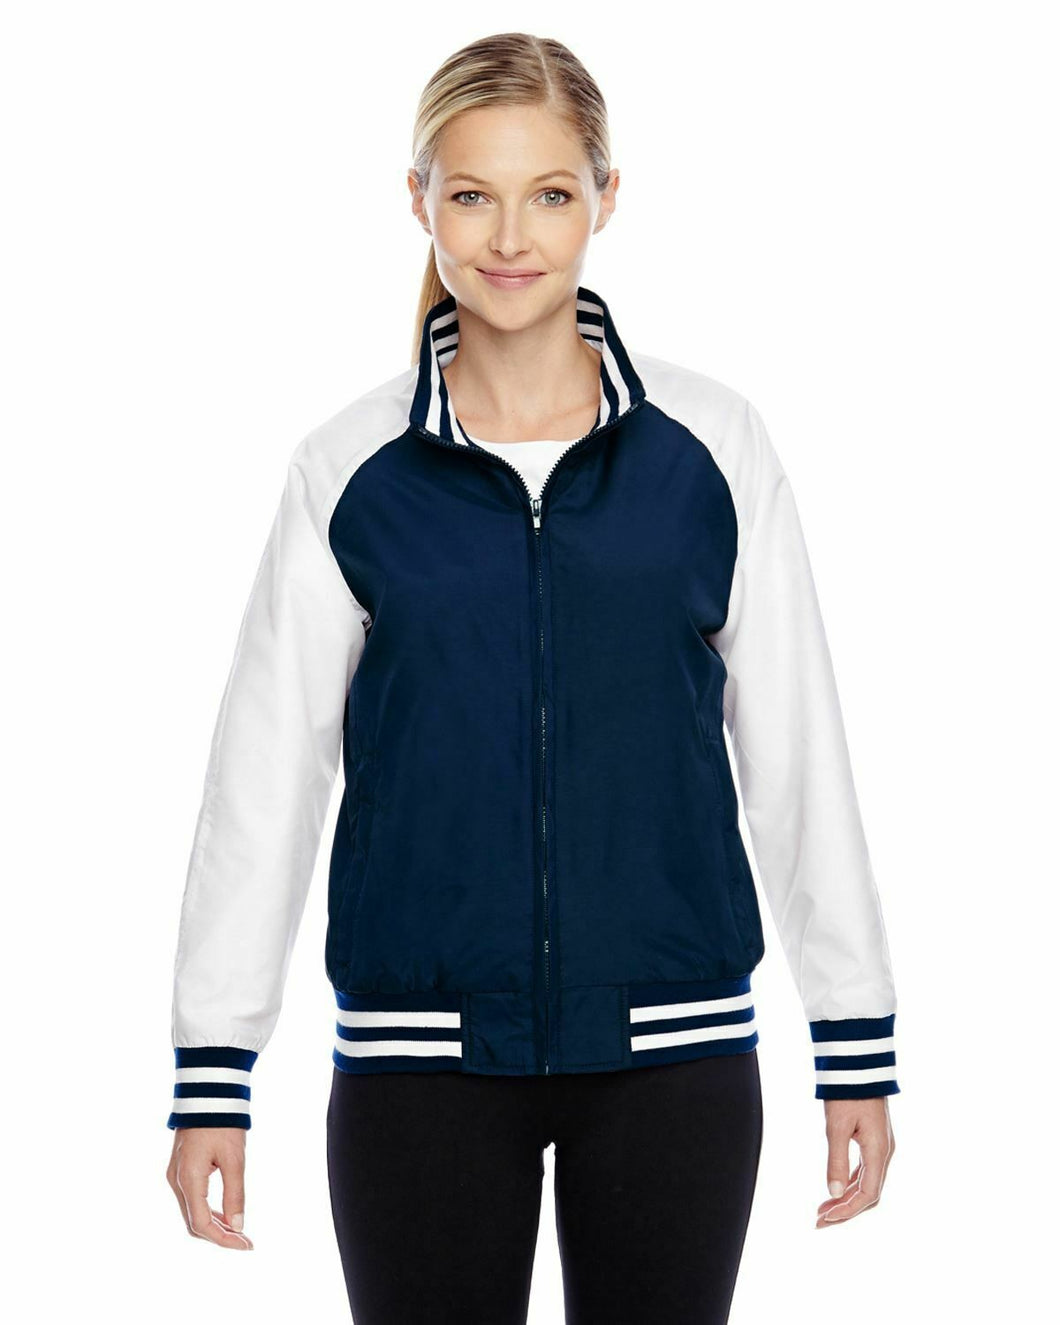 Team 365 Retro Style Ladies Championship Jacket, Dark Navy & White - New